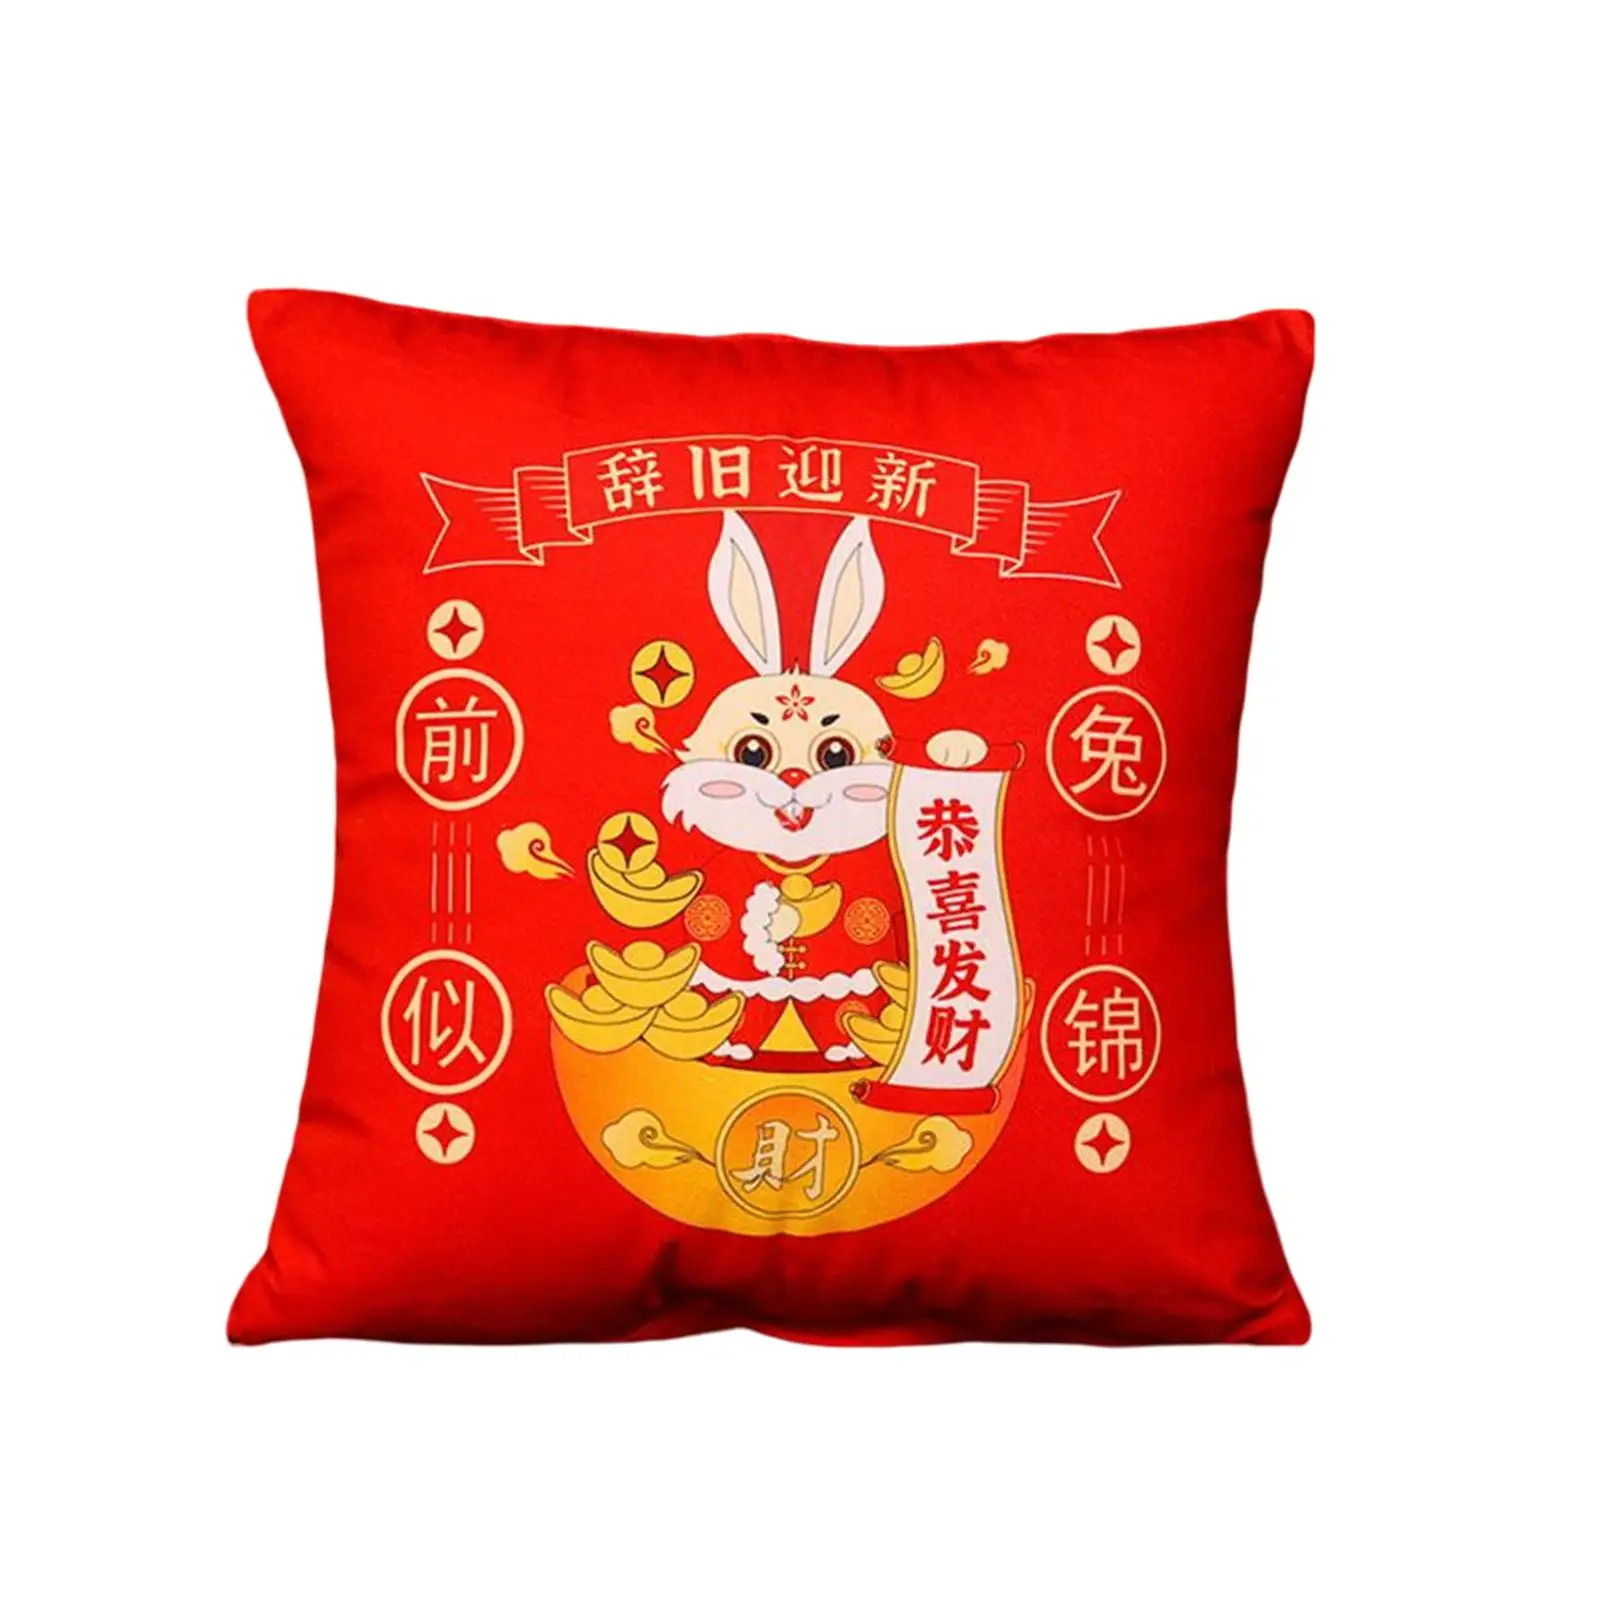 40cm Sofa pillow invisible Zipper Rabbit Printed Ornaments for Chair Car